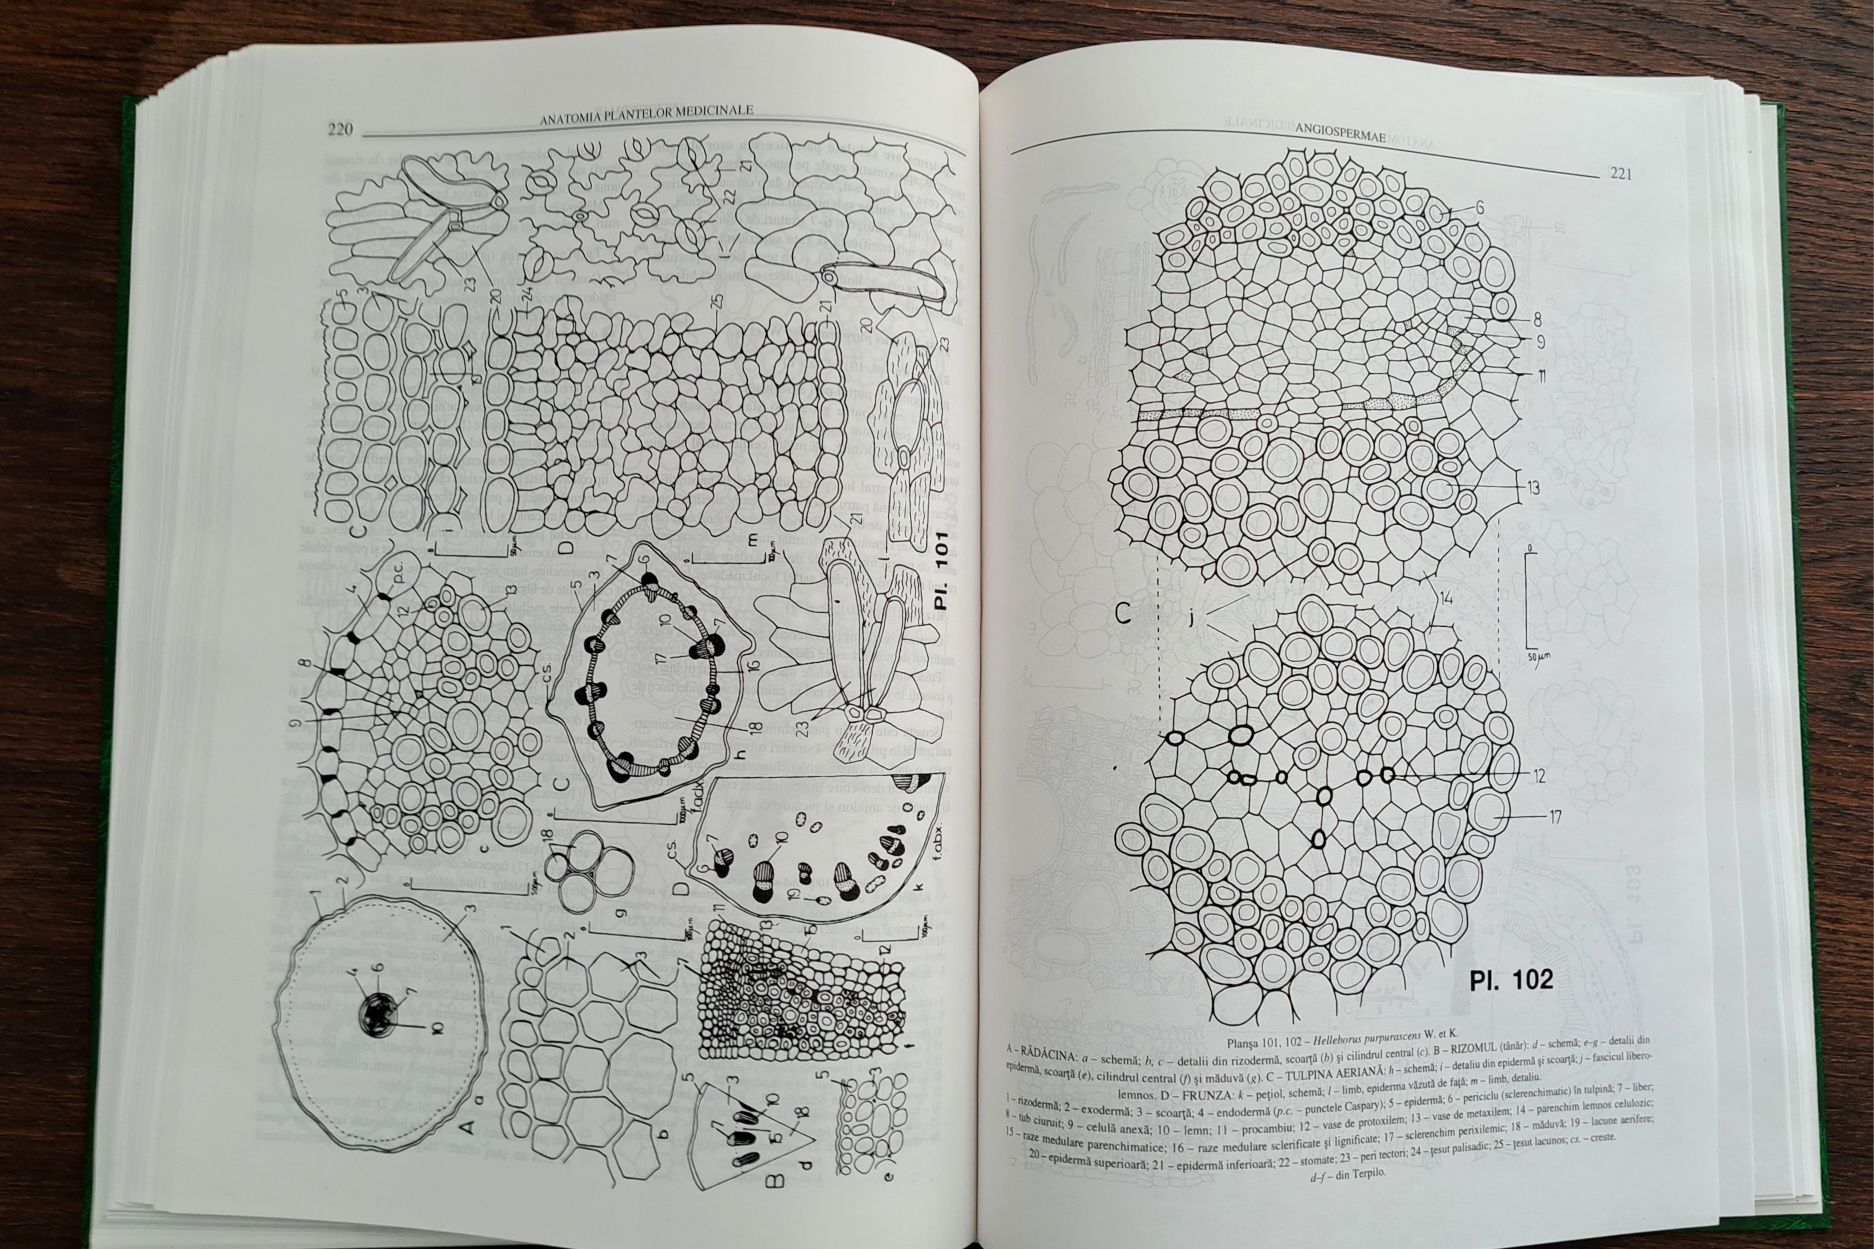 Anatomia plantelor medicinale. Atlas - Editura Academiei Romane